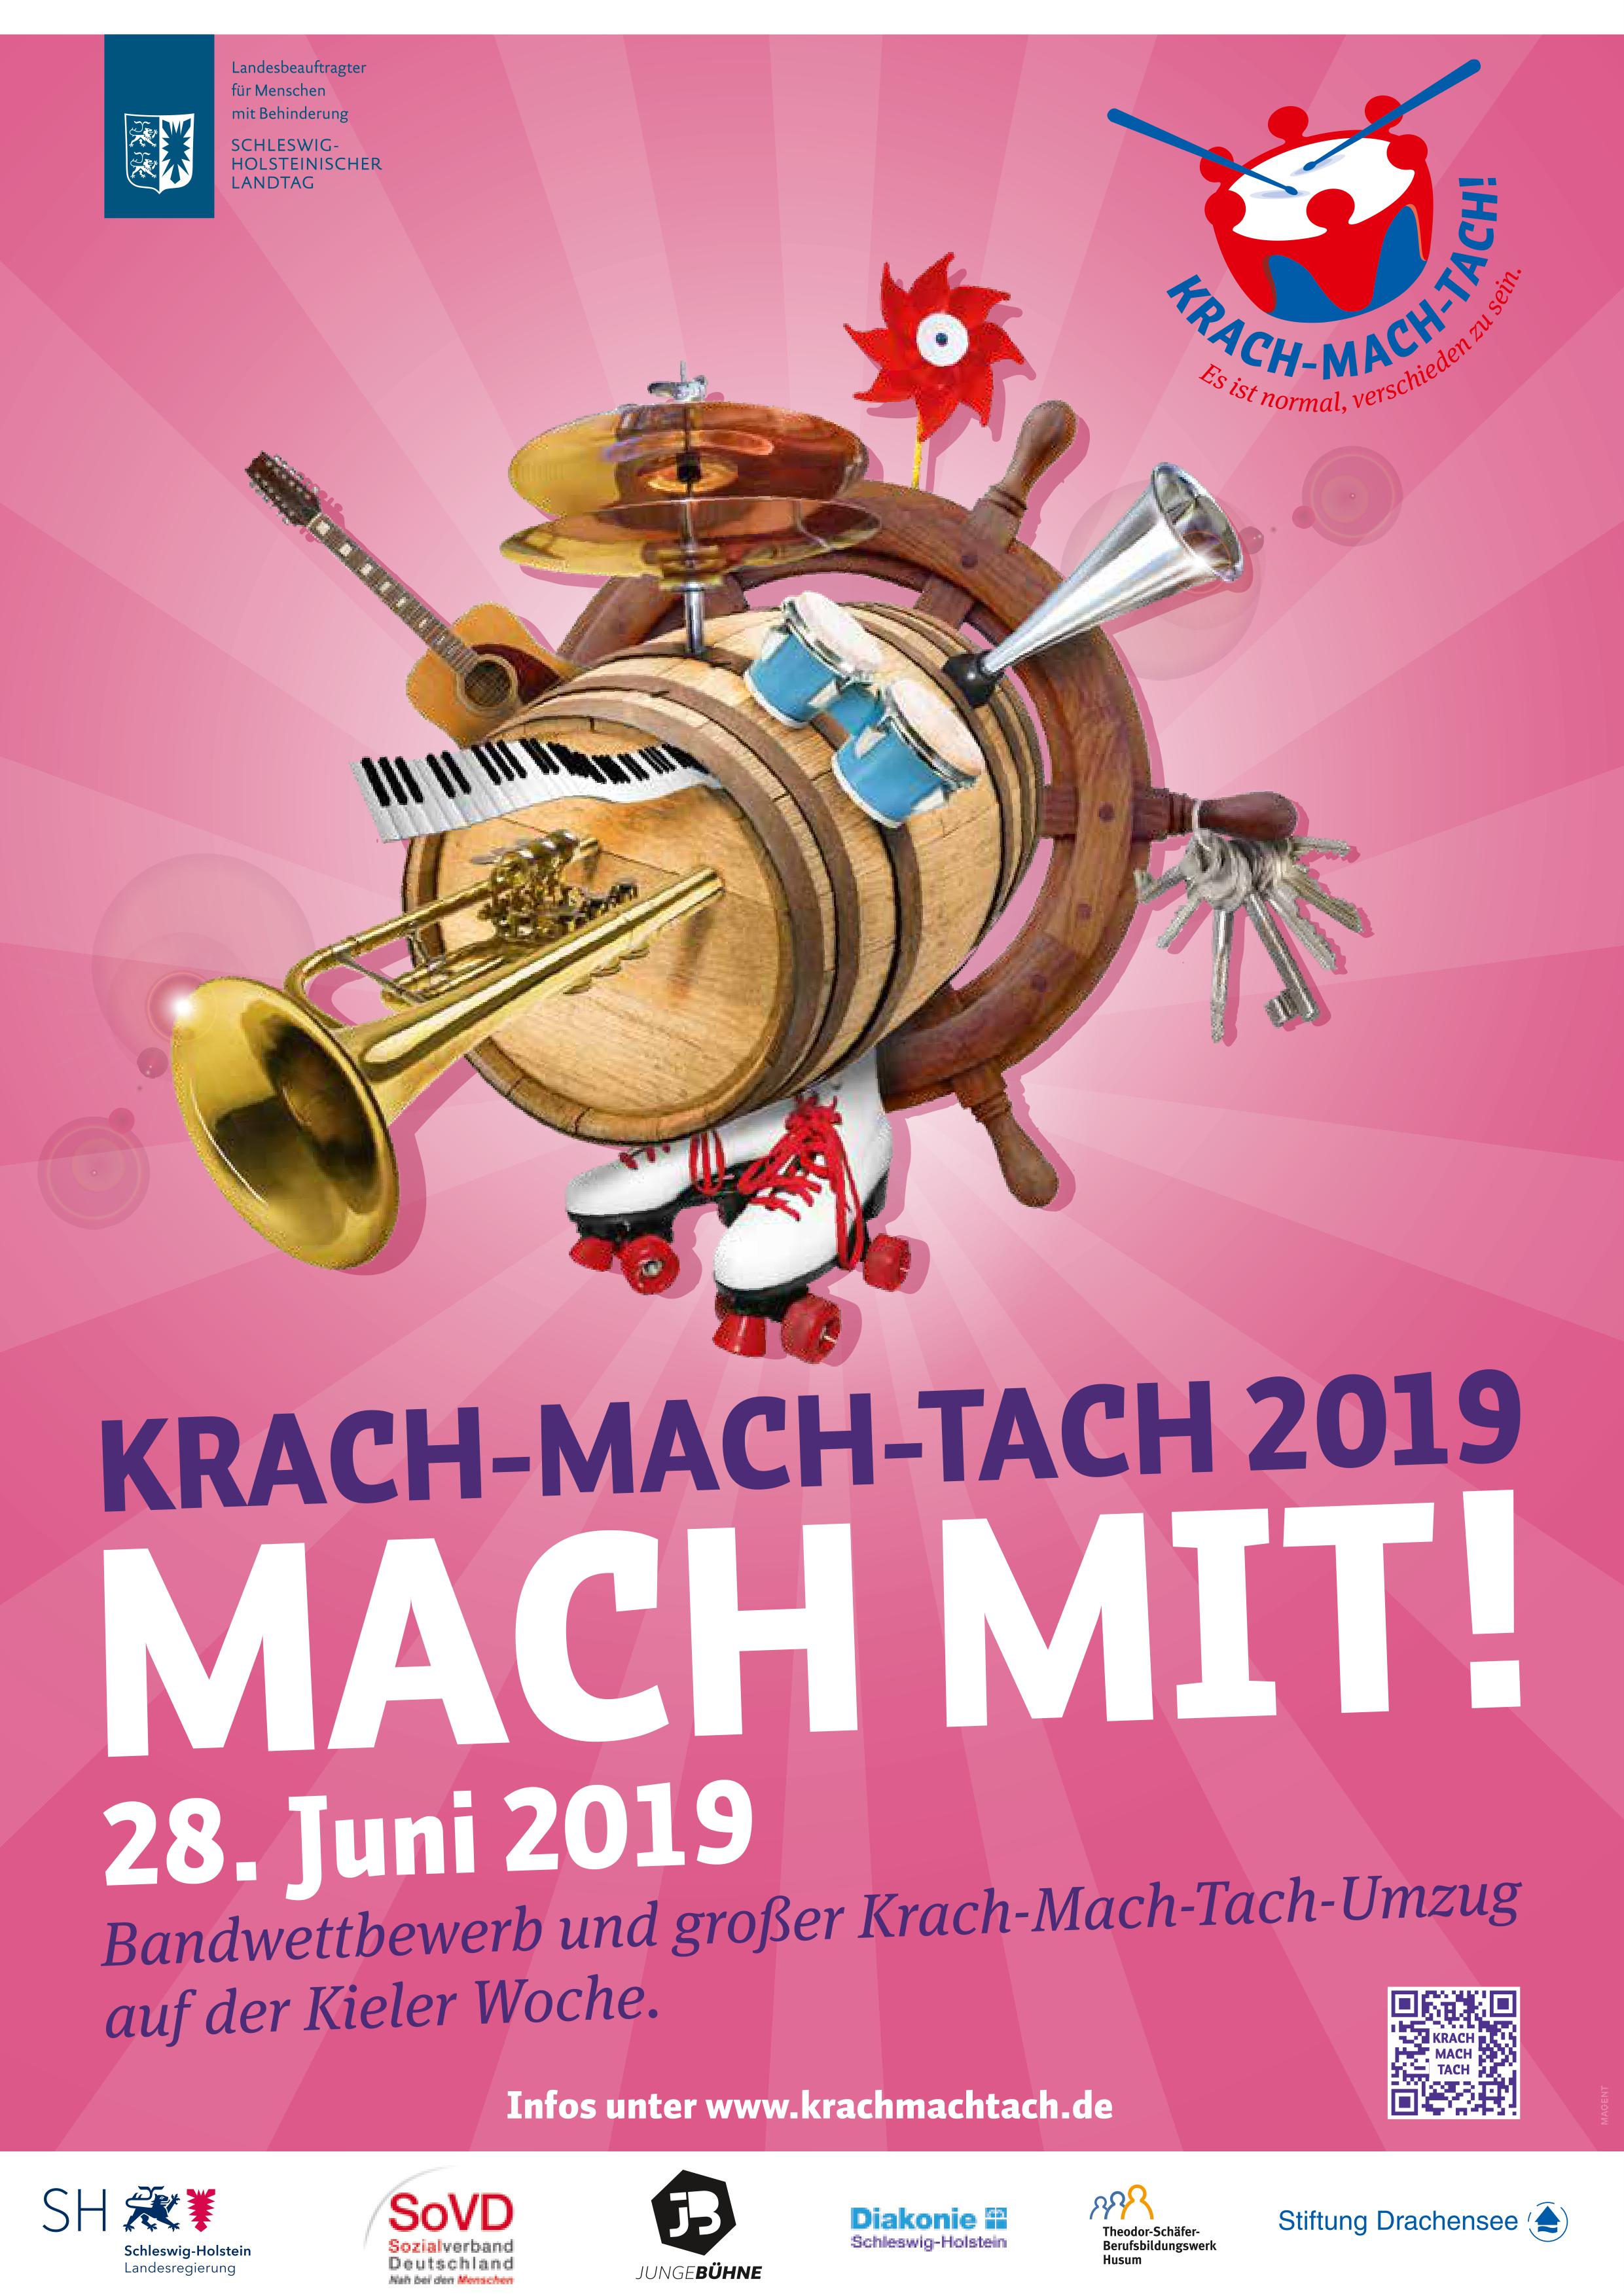 [Translate to Leichte Sprache:] Plakat Krach-Mach-Tach 2019